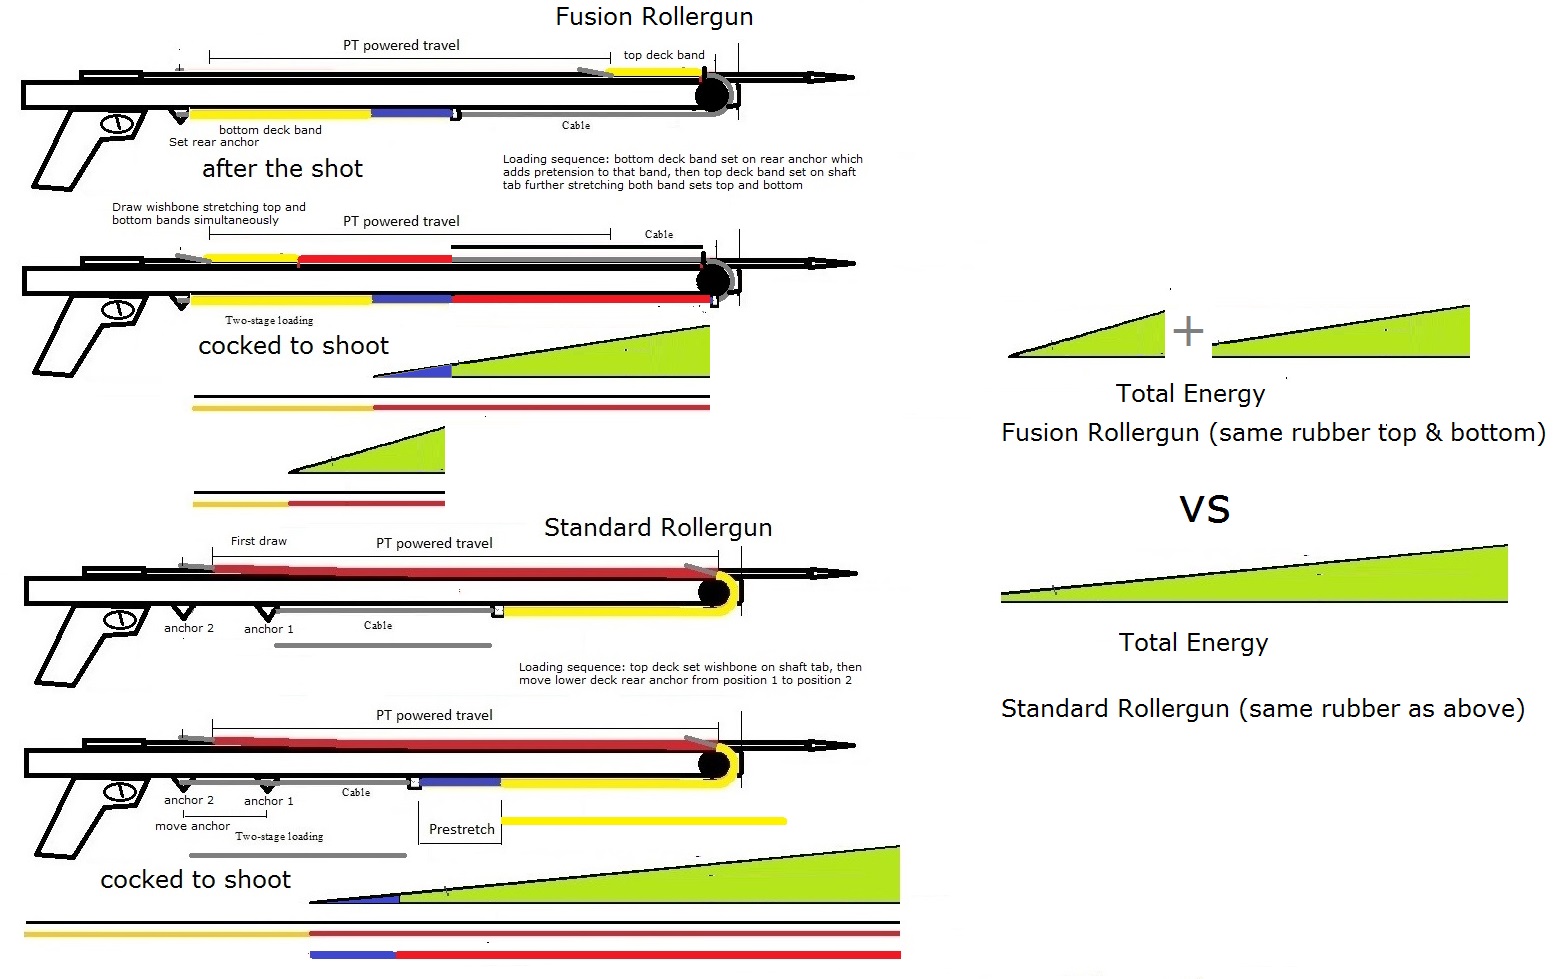 Fusion rollergun energy comparison.jpg